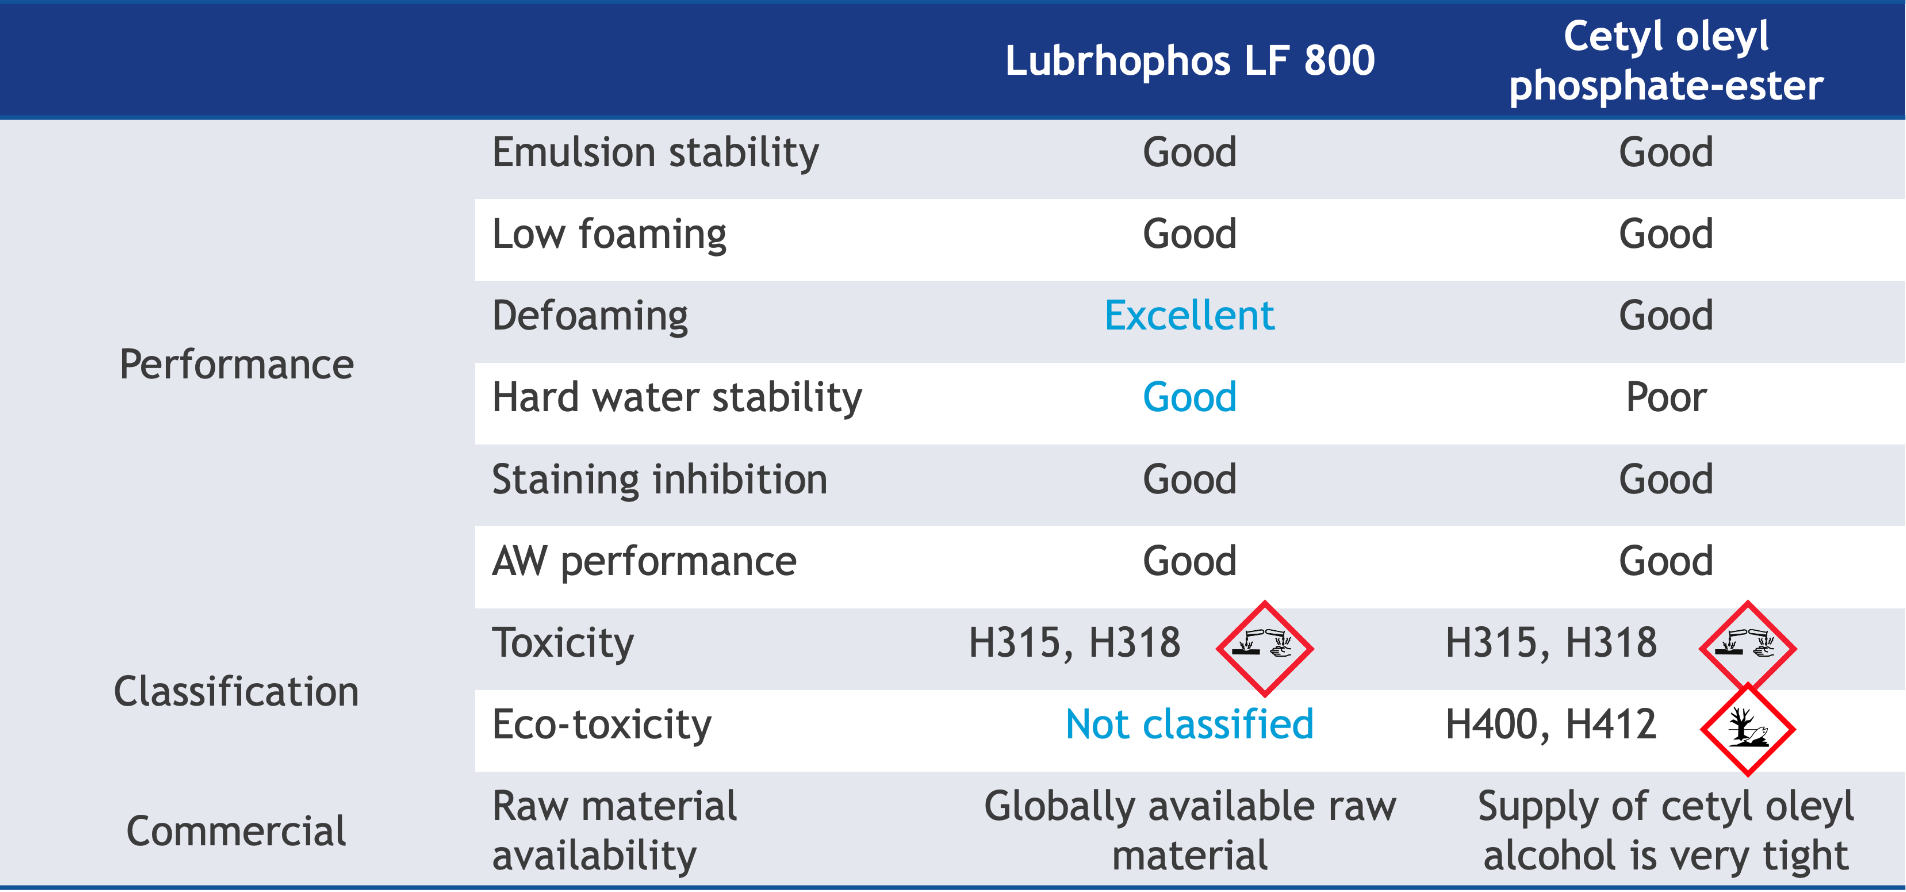 excellent defoaming of lubrhophos lf 800